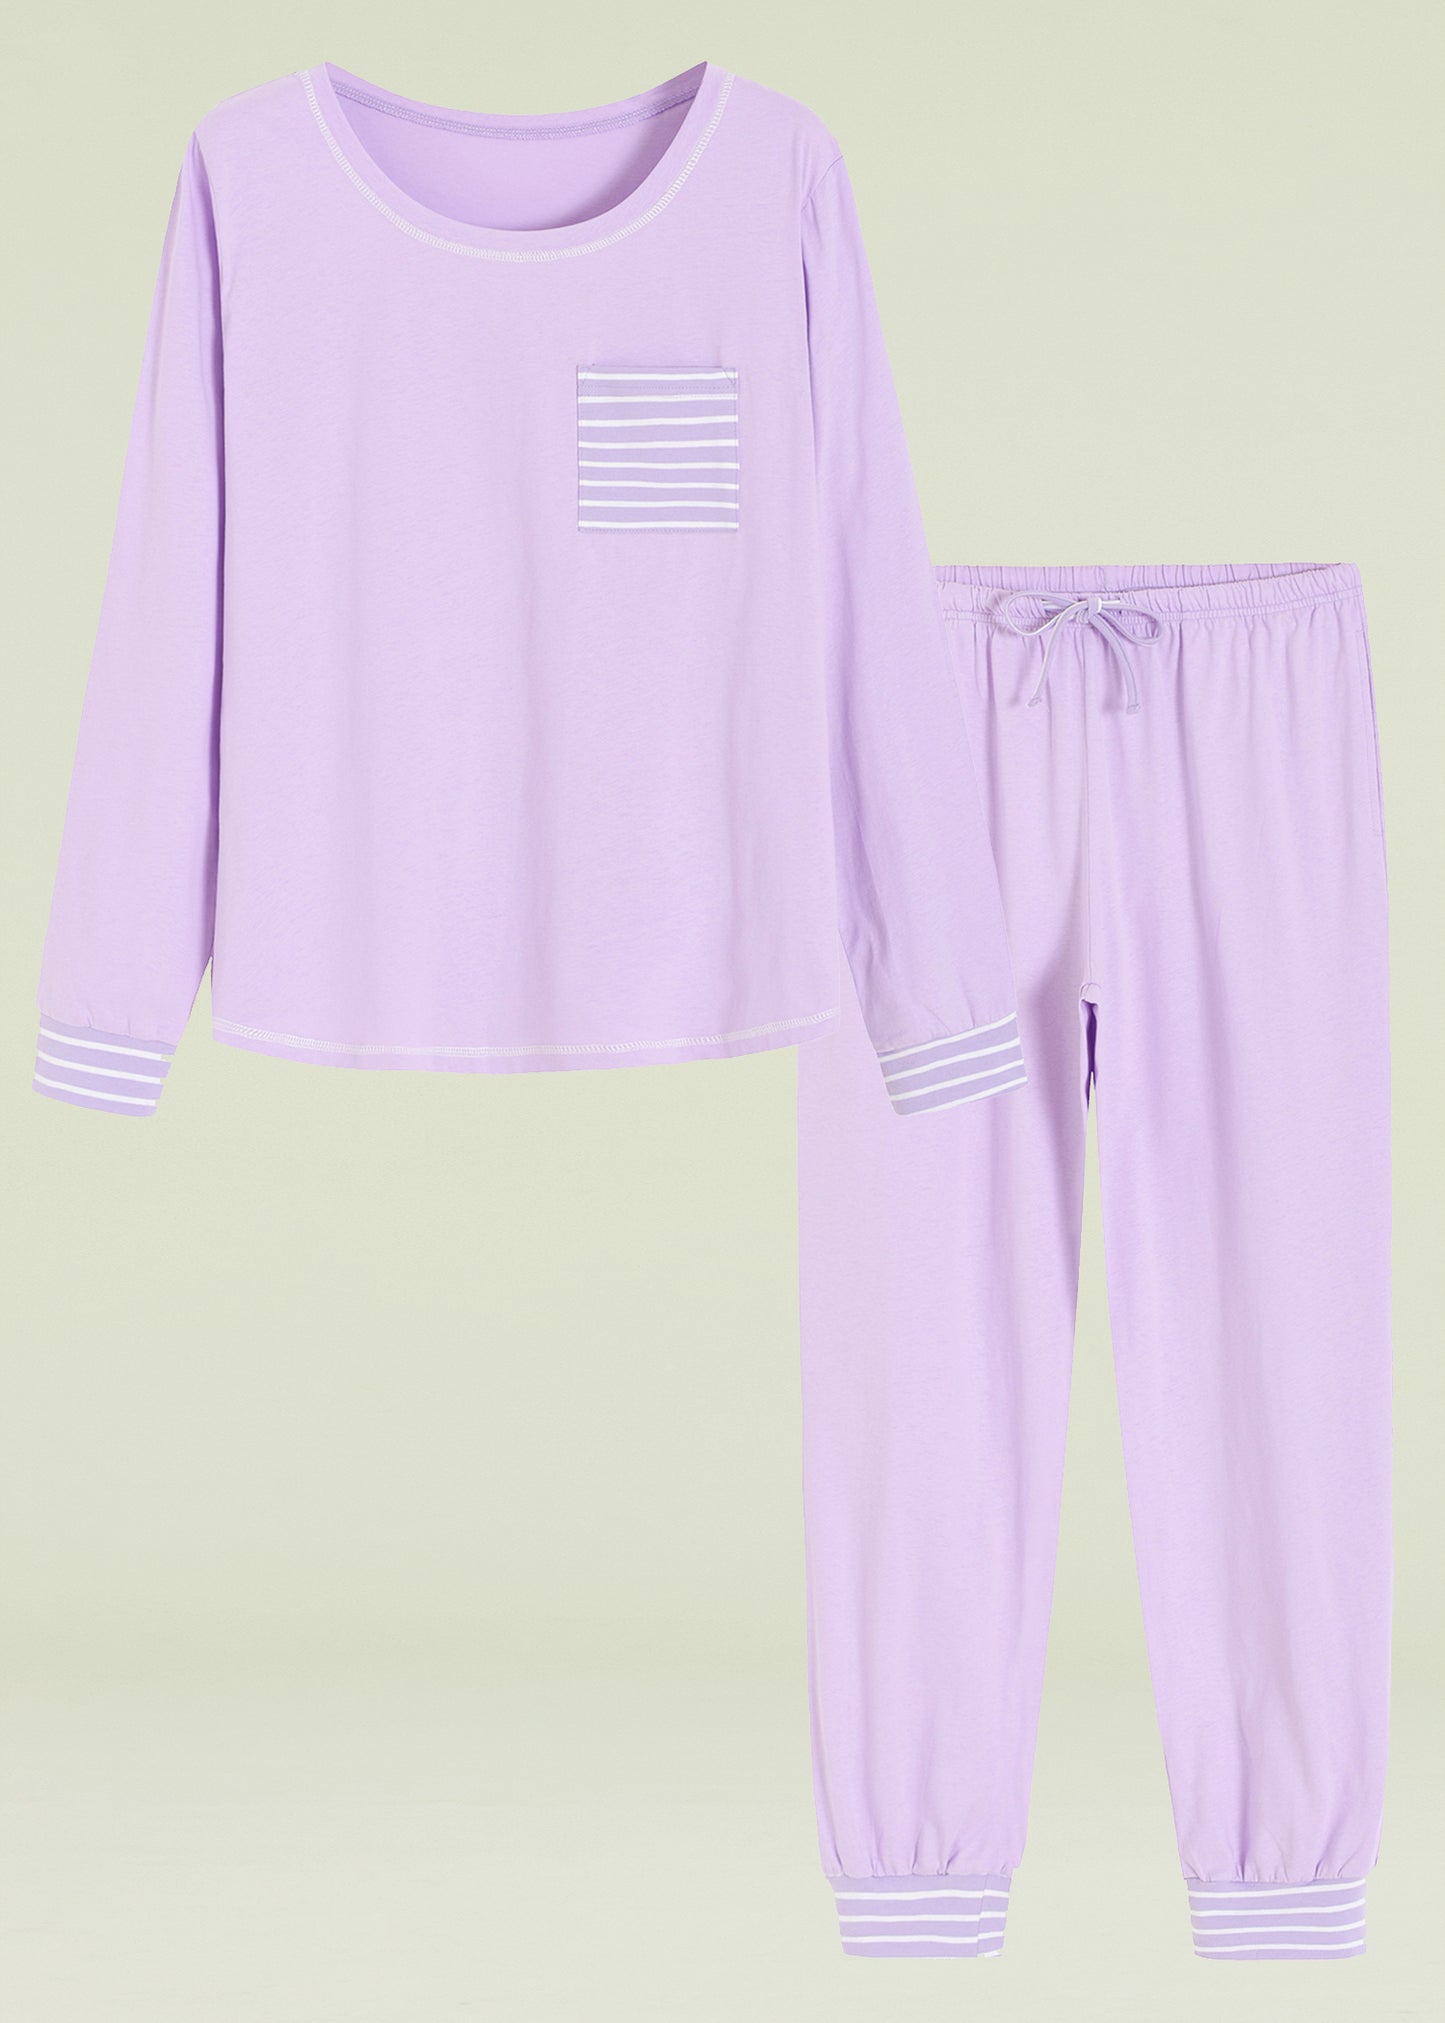 Women's Cotton Pajama Set Long Sleeve Sleepwear